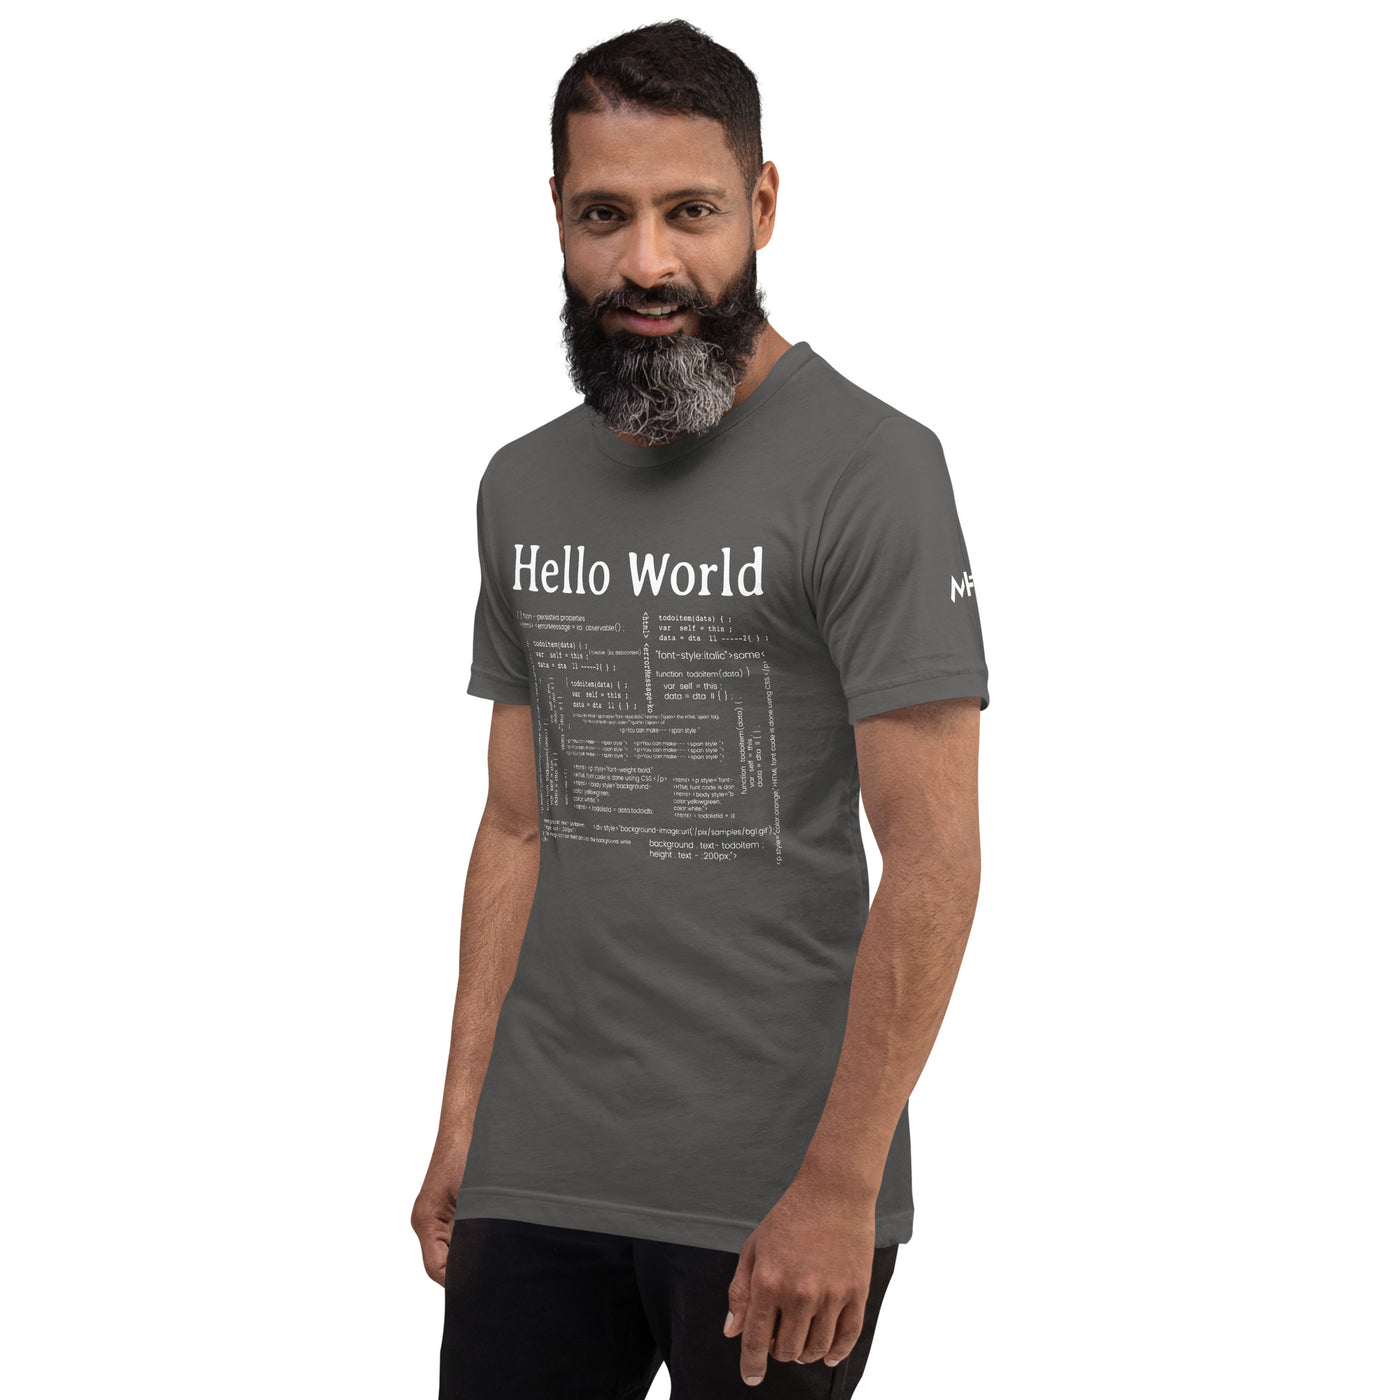 Hello world - Unisex t-shirt